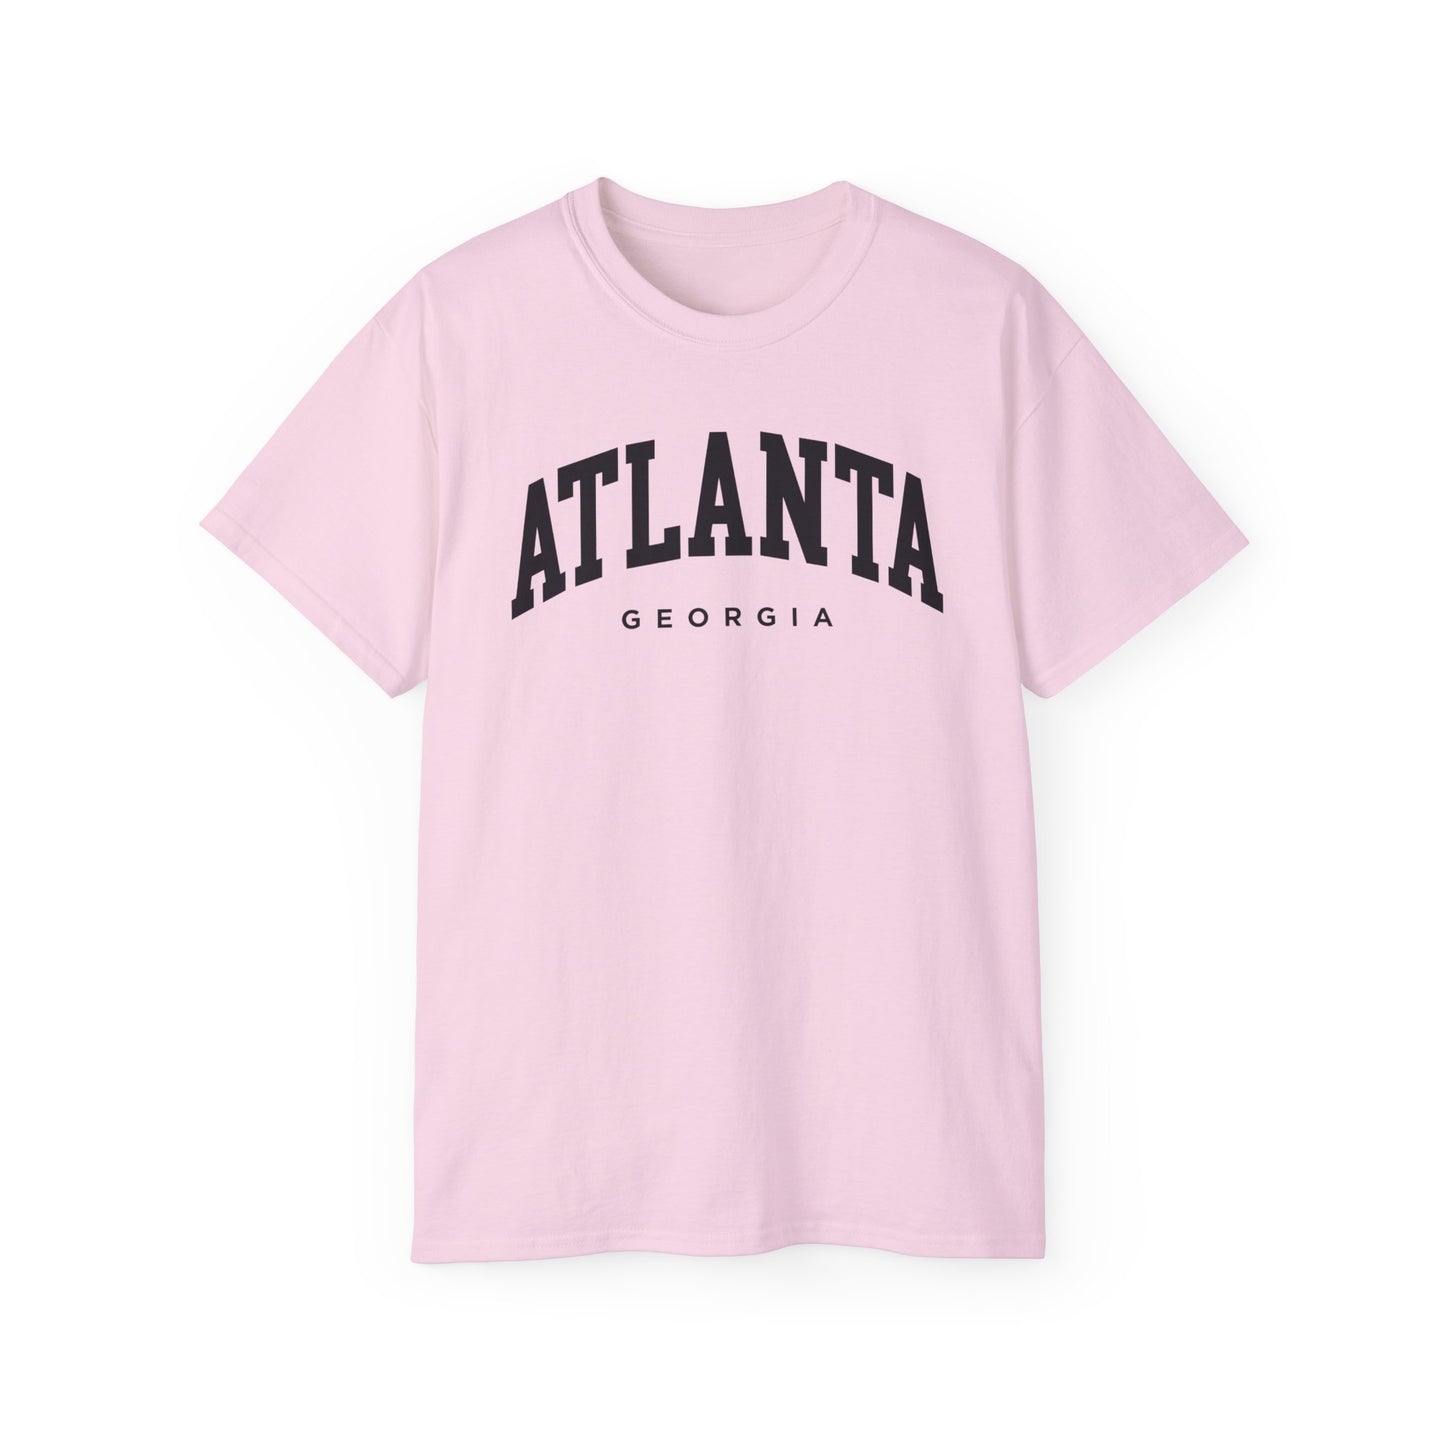 Atlanta Georgia Tee